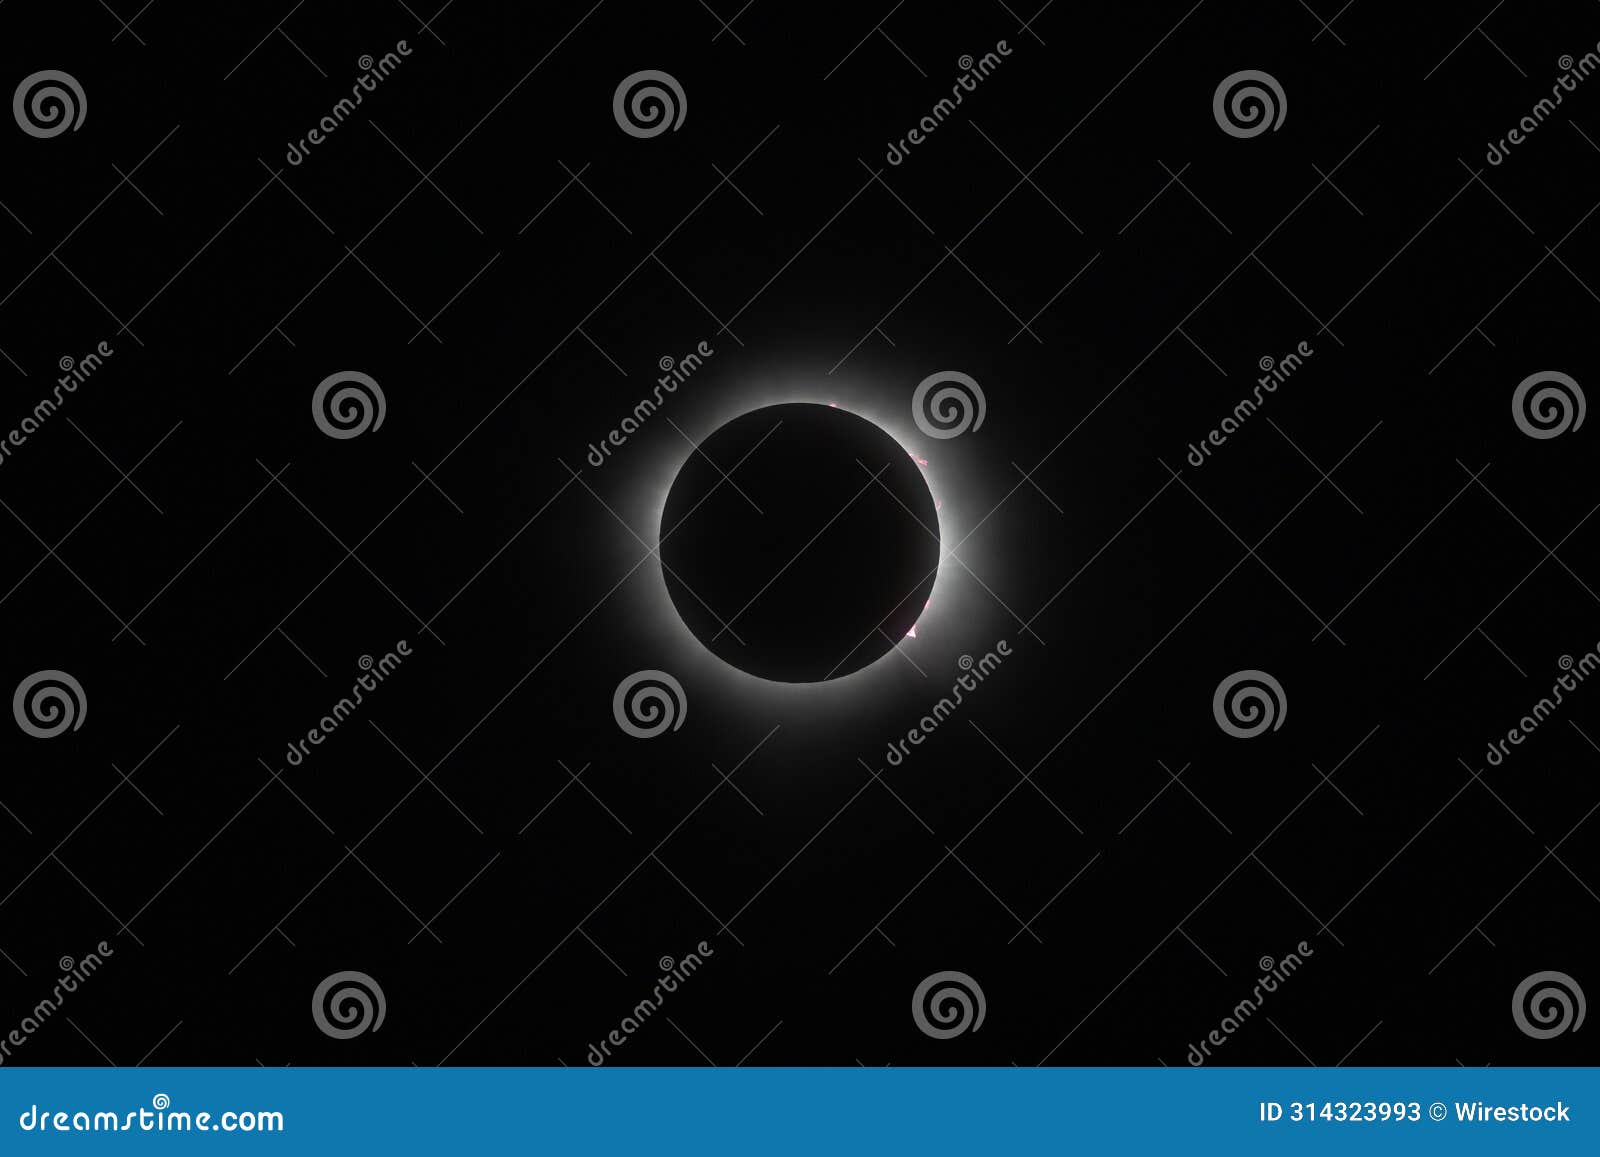 the solar corona just in total eclipse from mazatlan, sinaloa, mexico